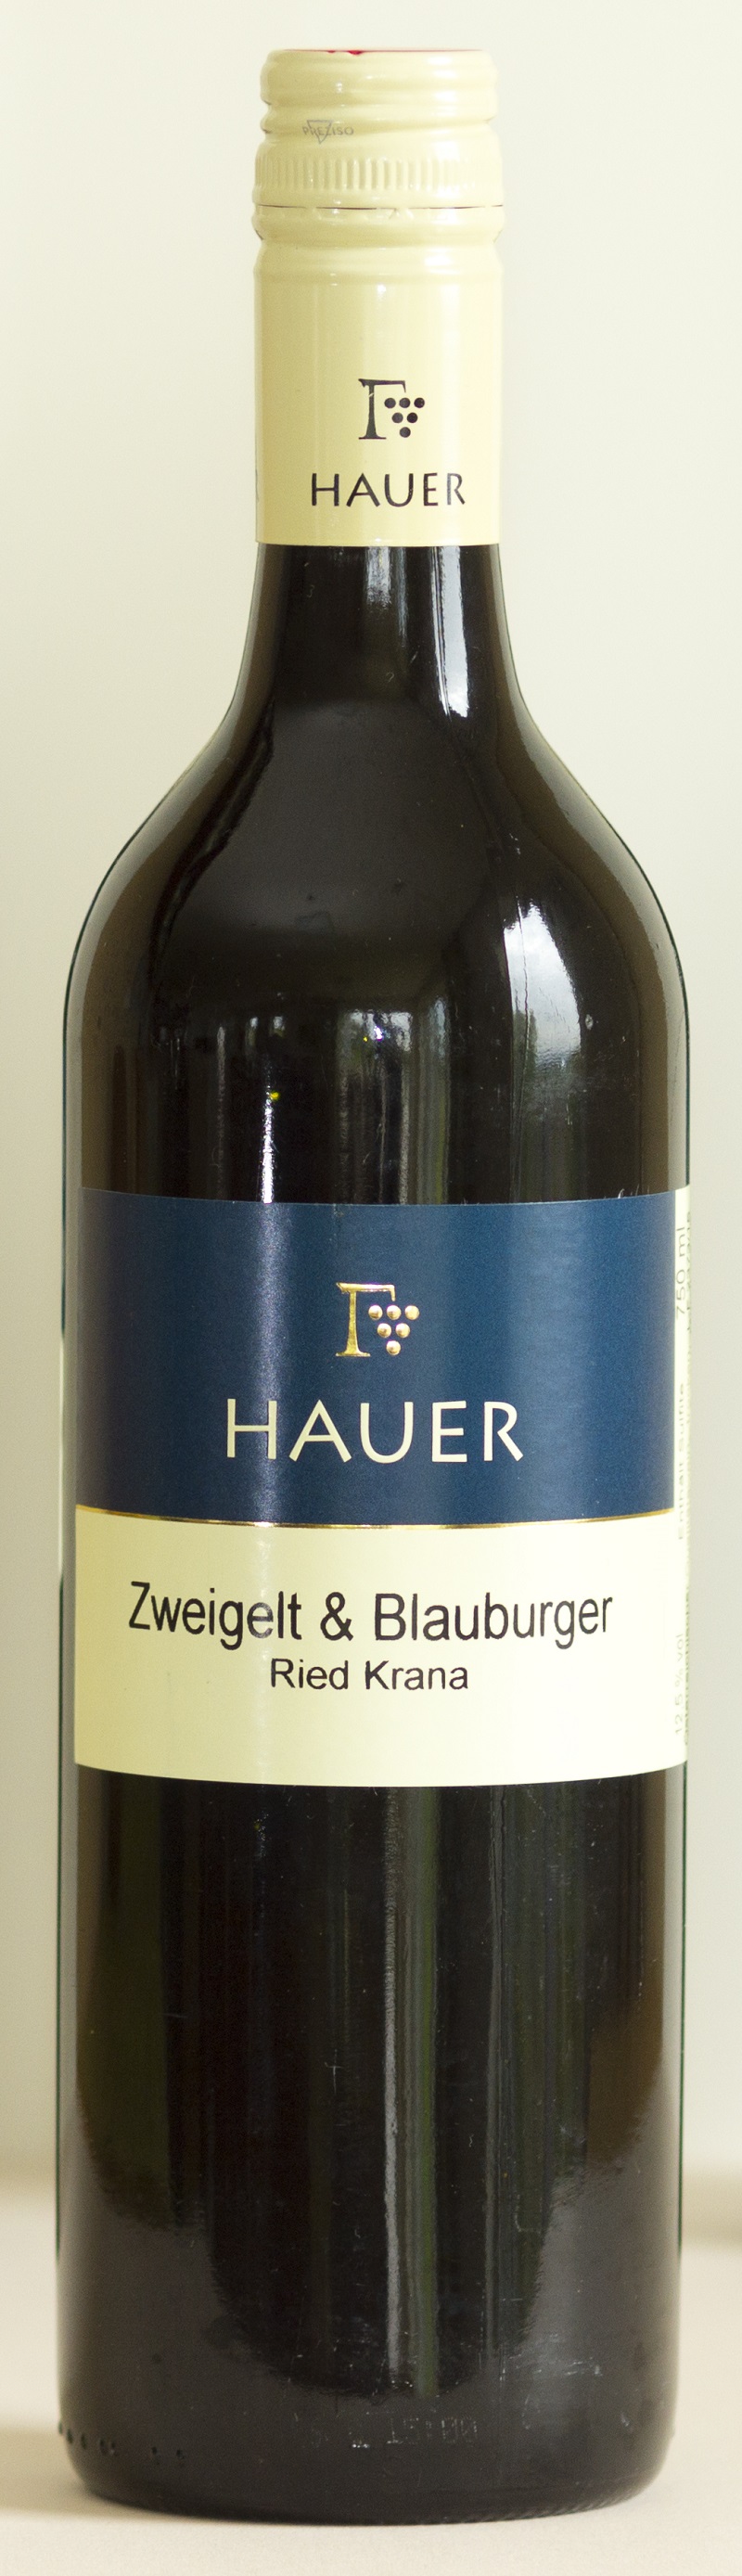 Zweigelt & Blauburger